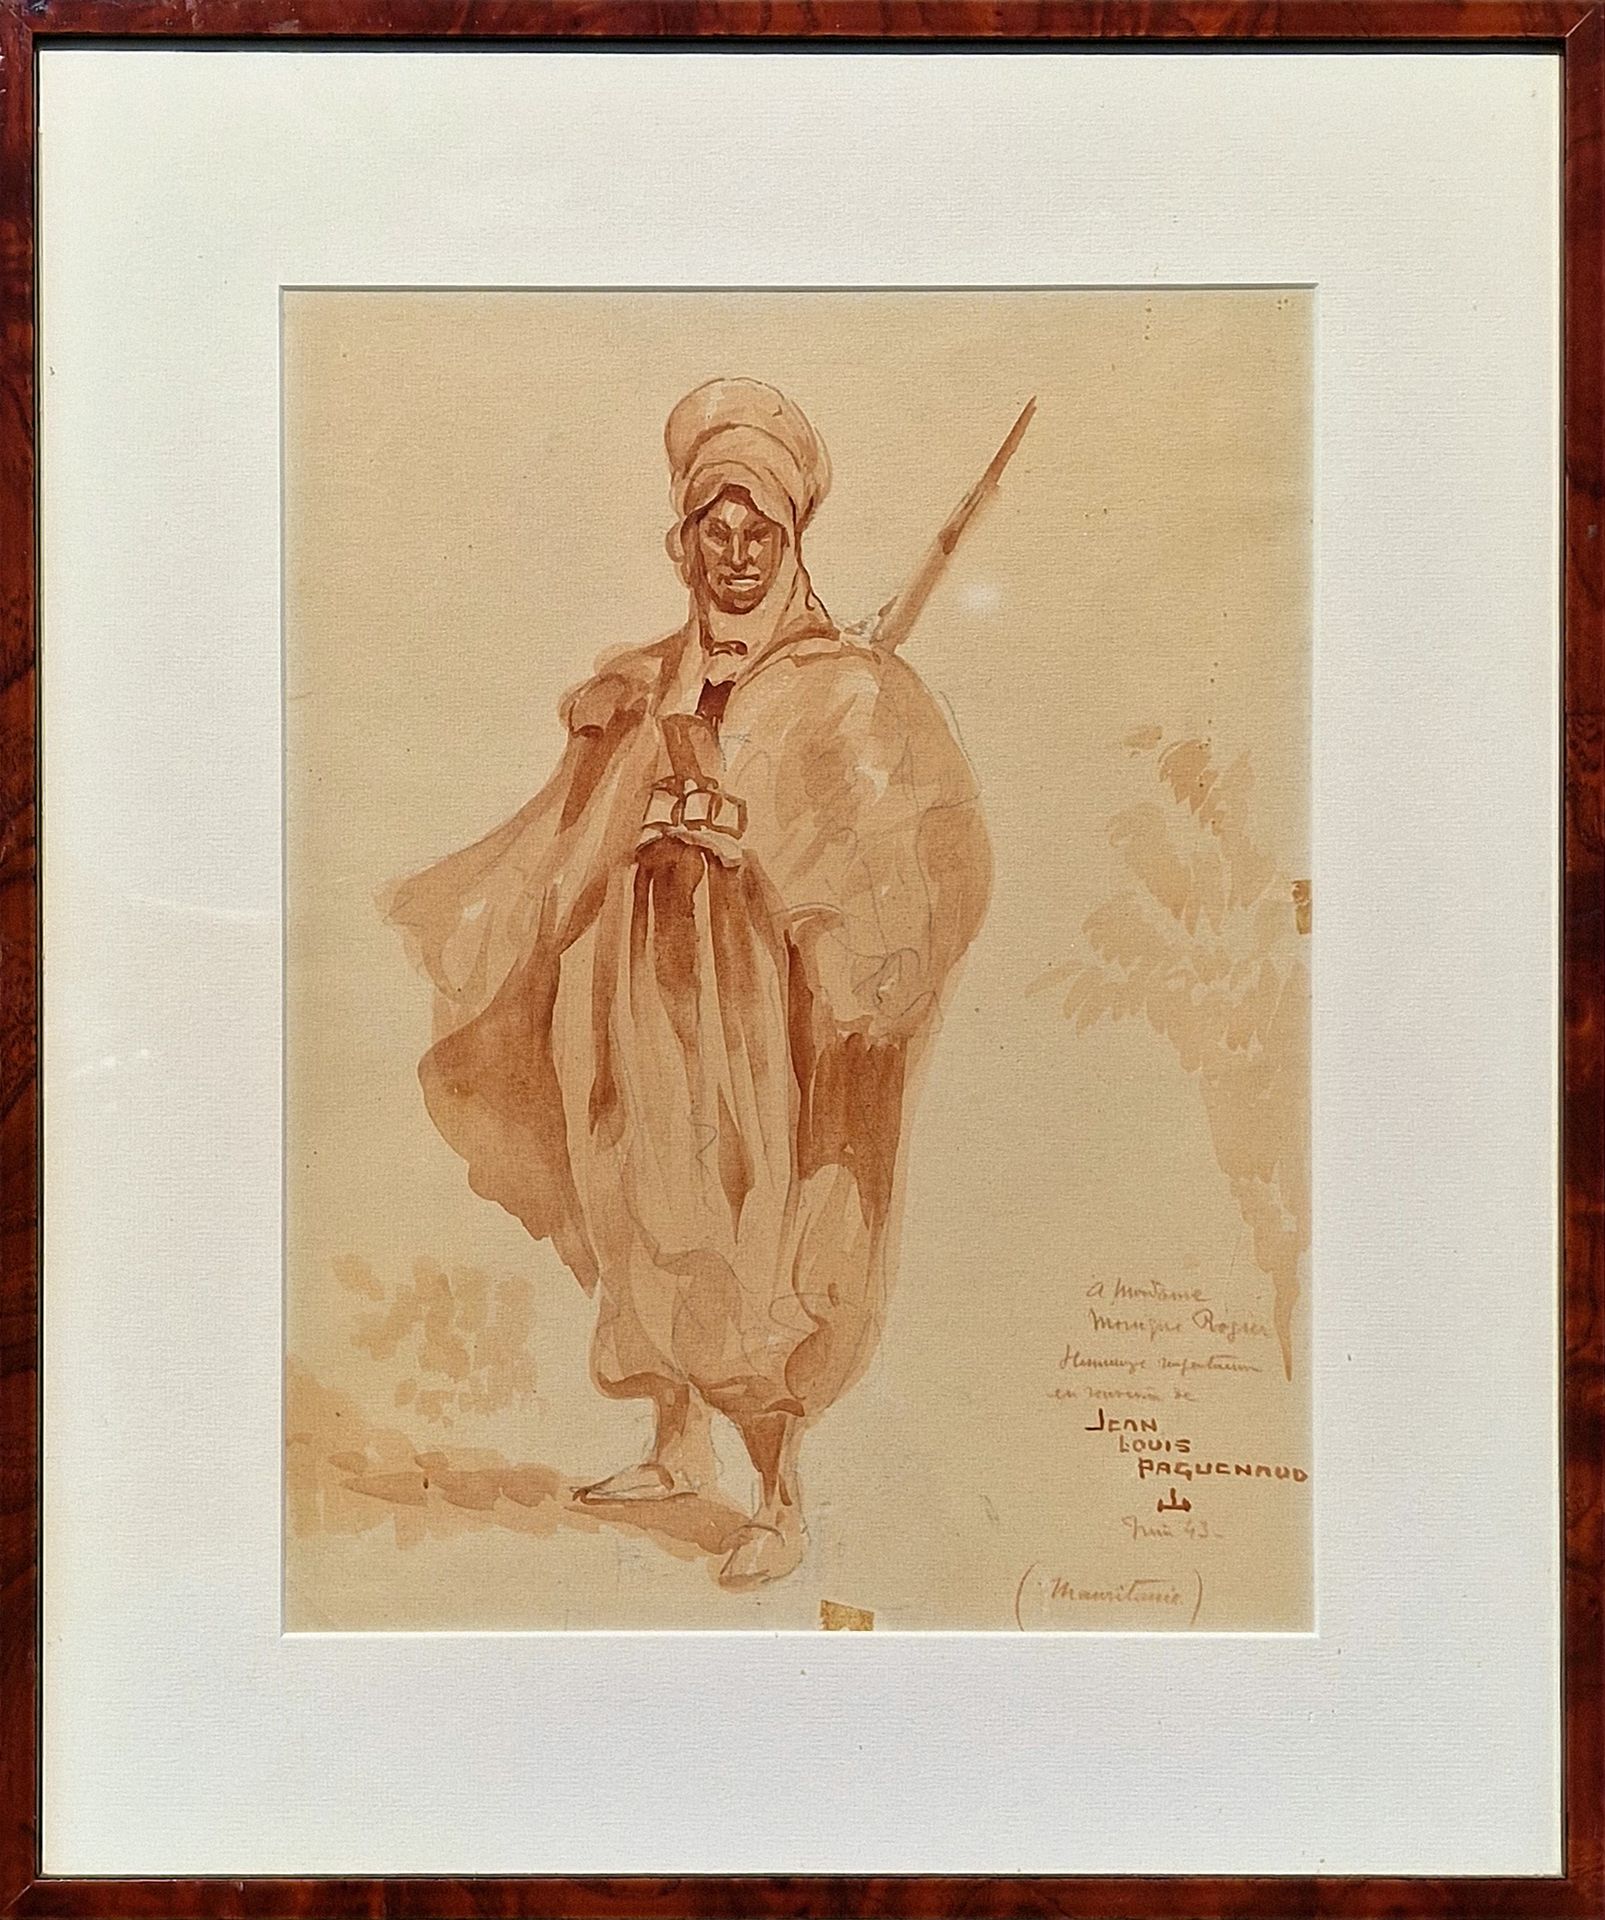 JEAN-LOUIS PAGUENAUD (1876-1952) 毛利塔尼亚人的燧发枪



混合媒体，纸上水彩和石墨，右下角有签名，专用和日期43年5月。

&hellip;